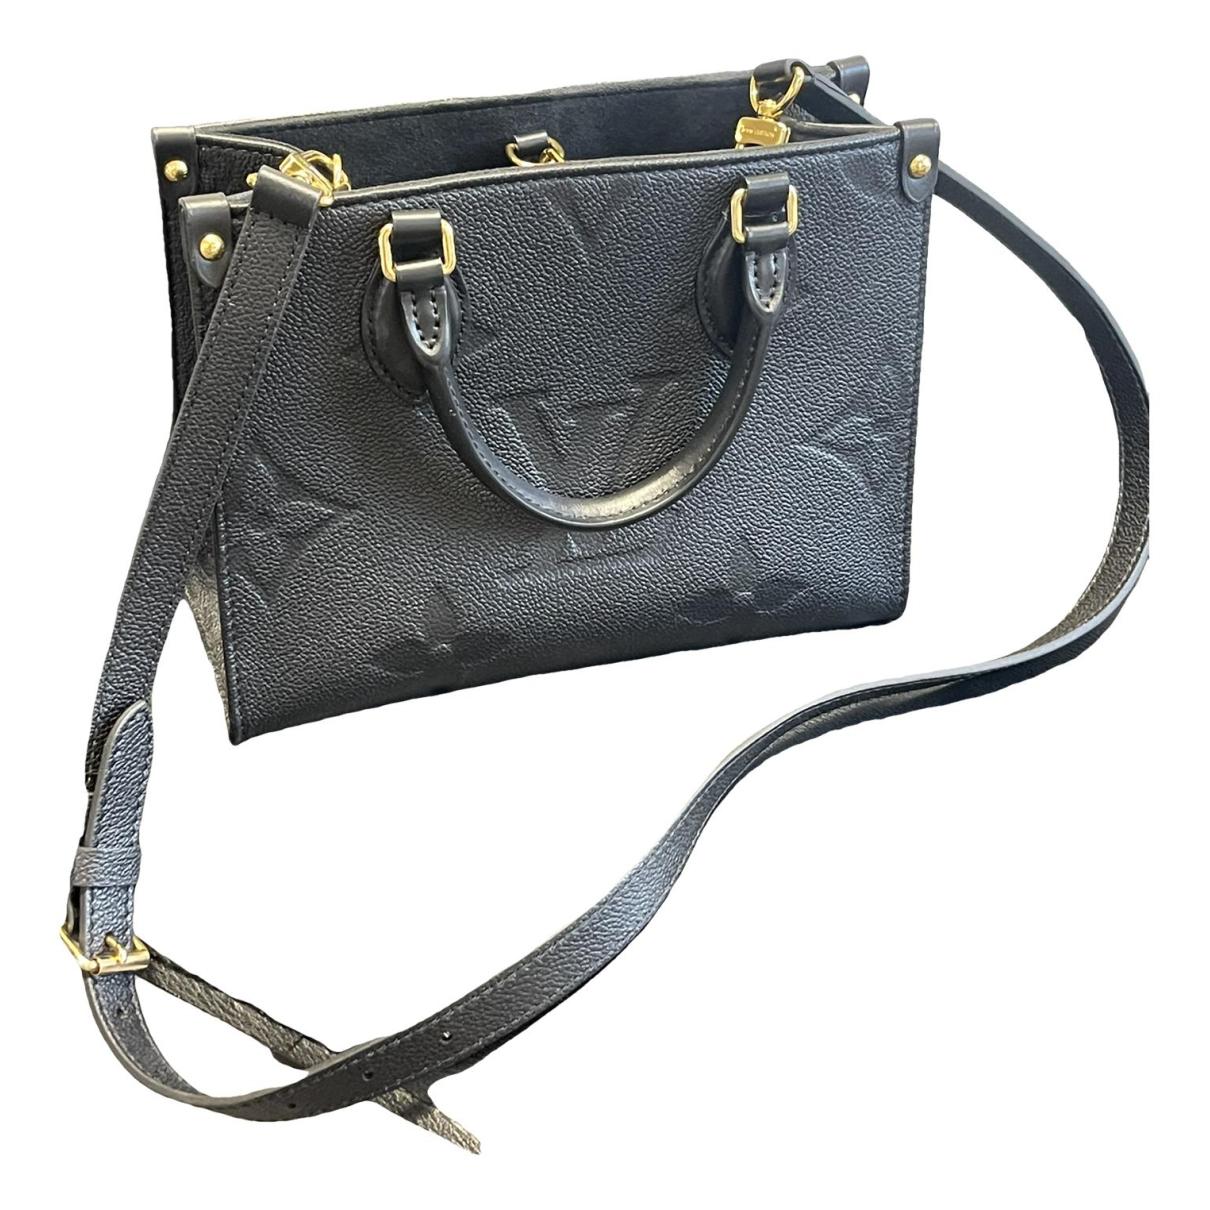 Onthego Louis Vuitton Handbags for Women - Vestiaire Collective